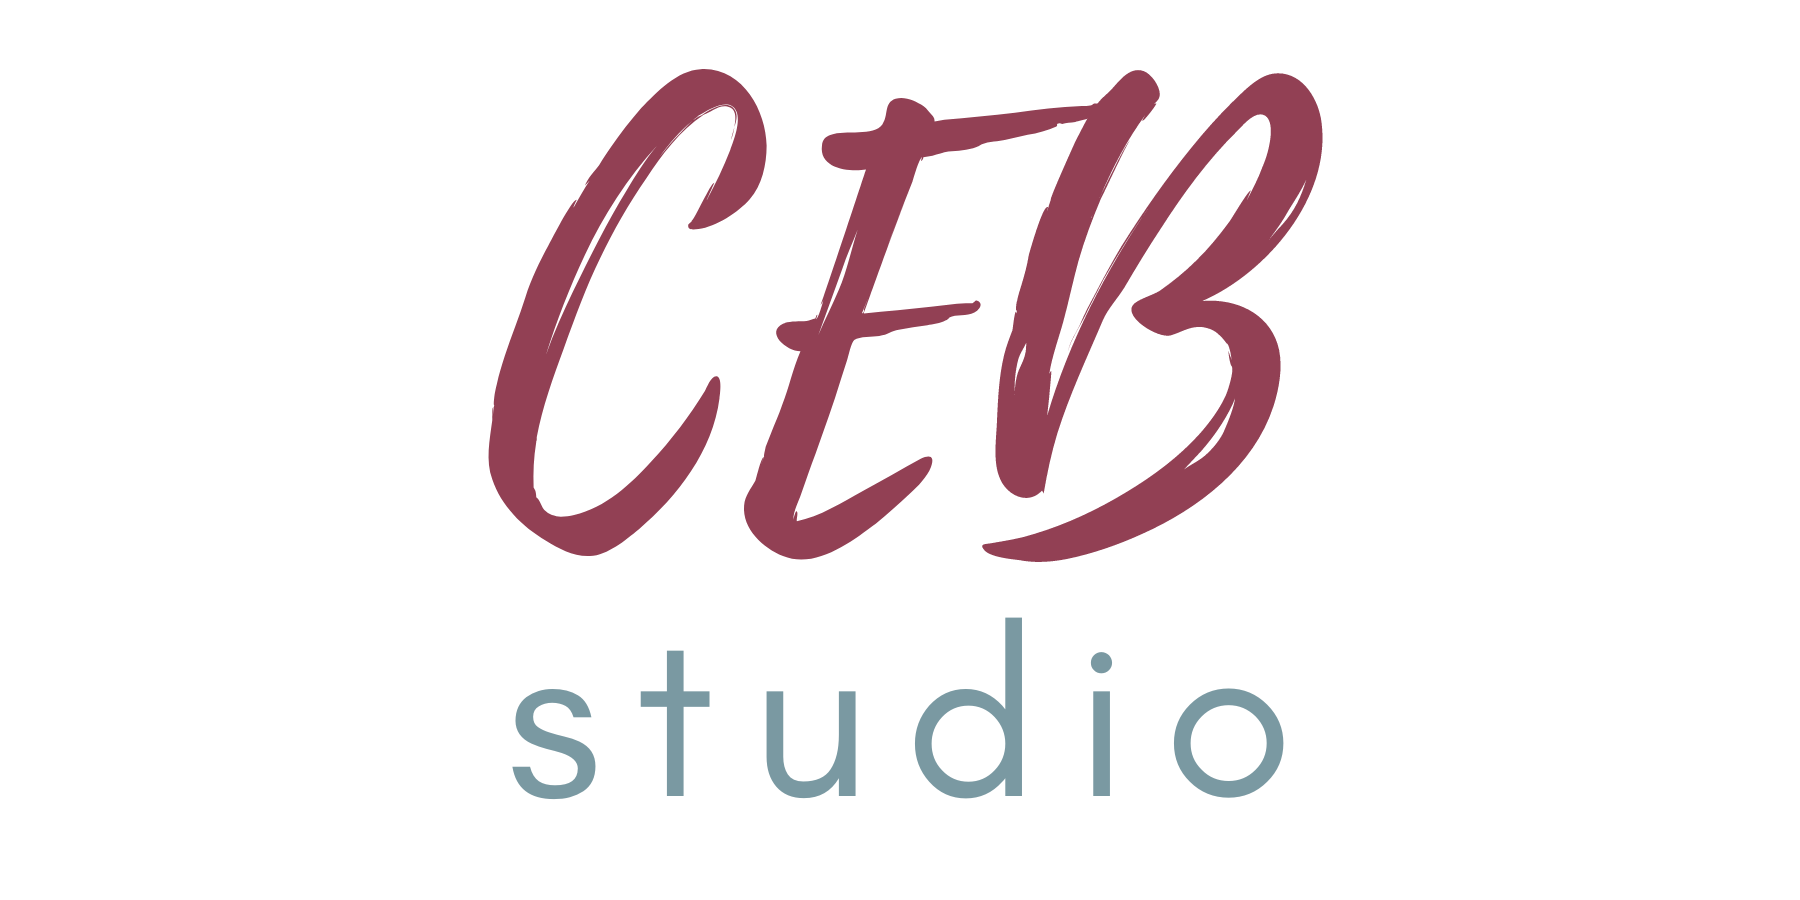 CEB studio